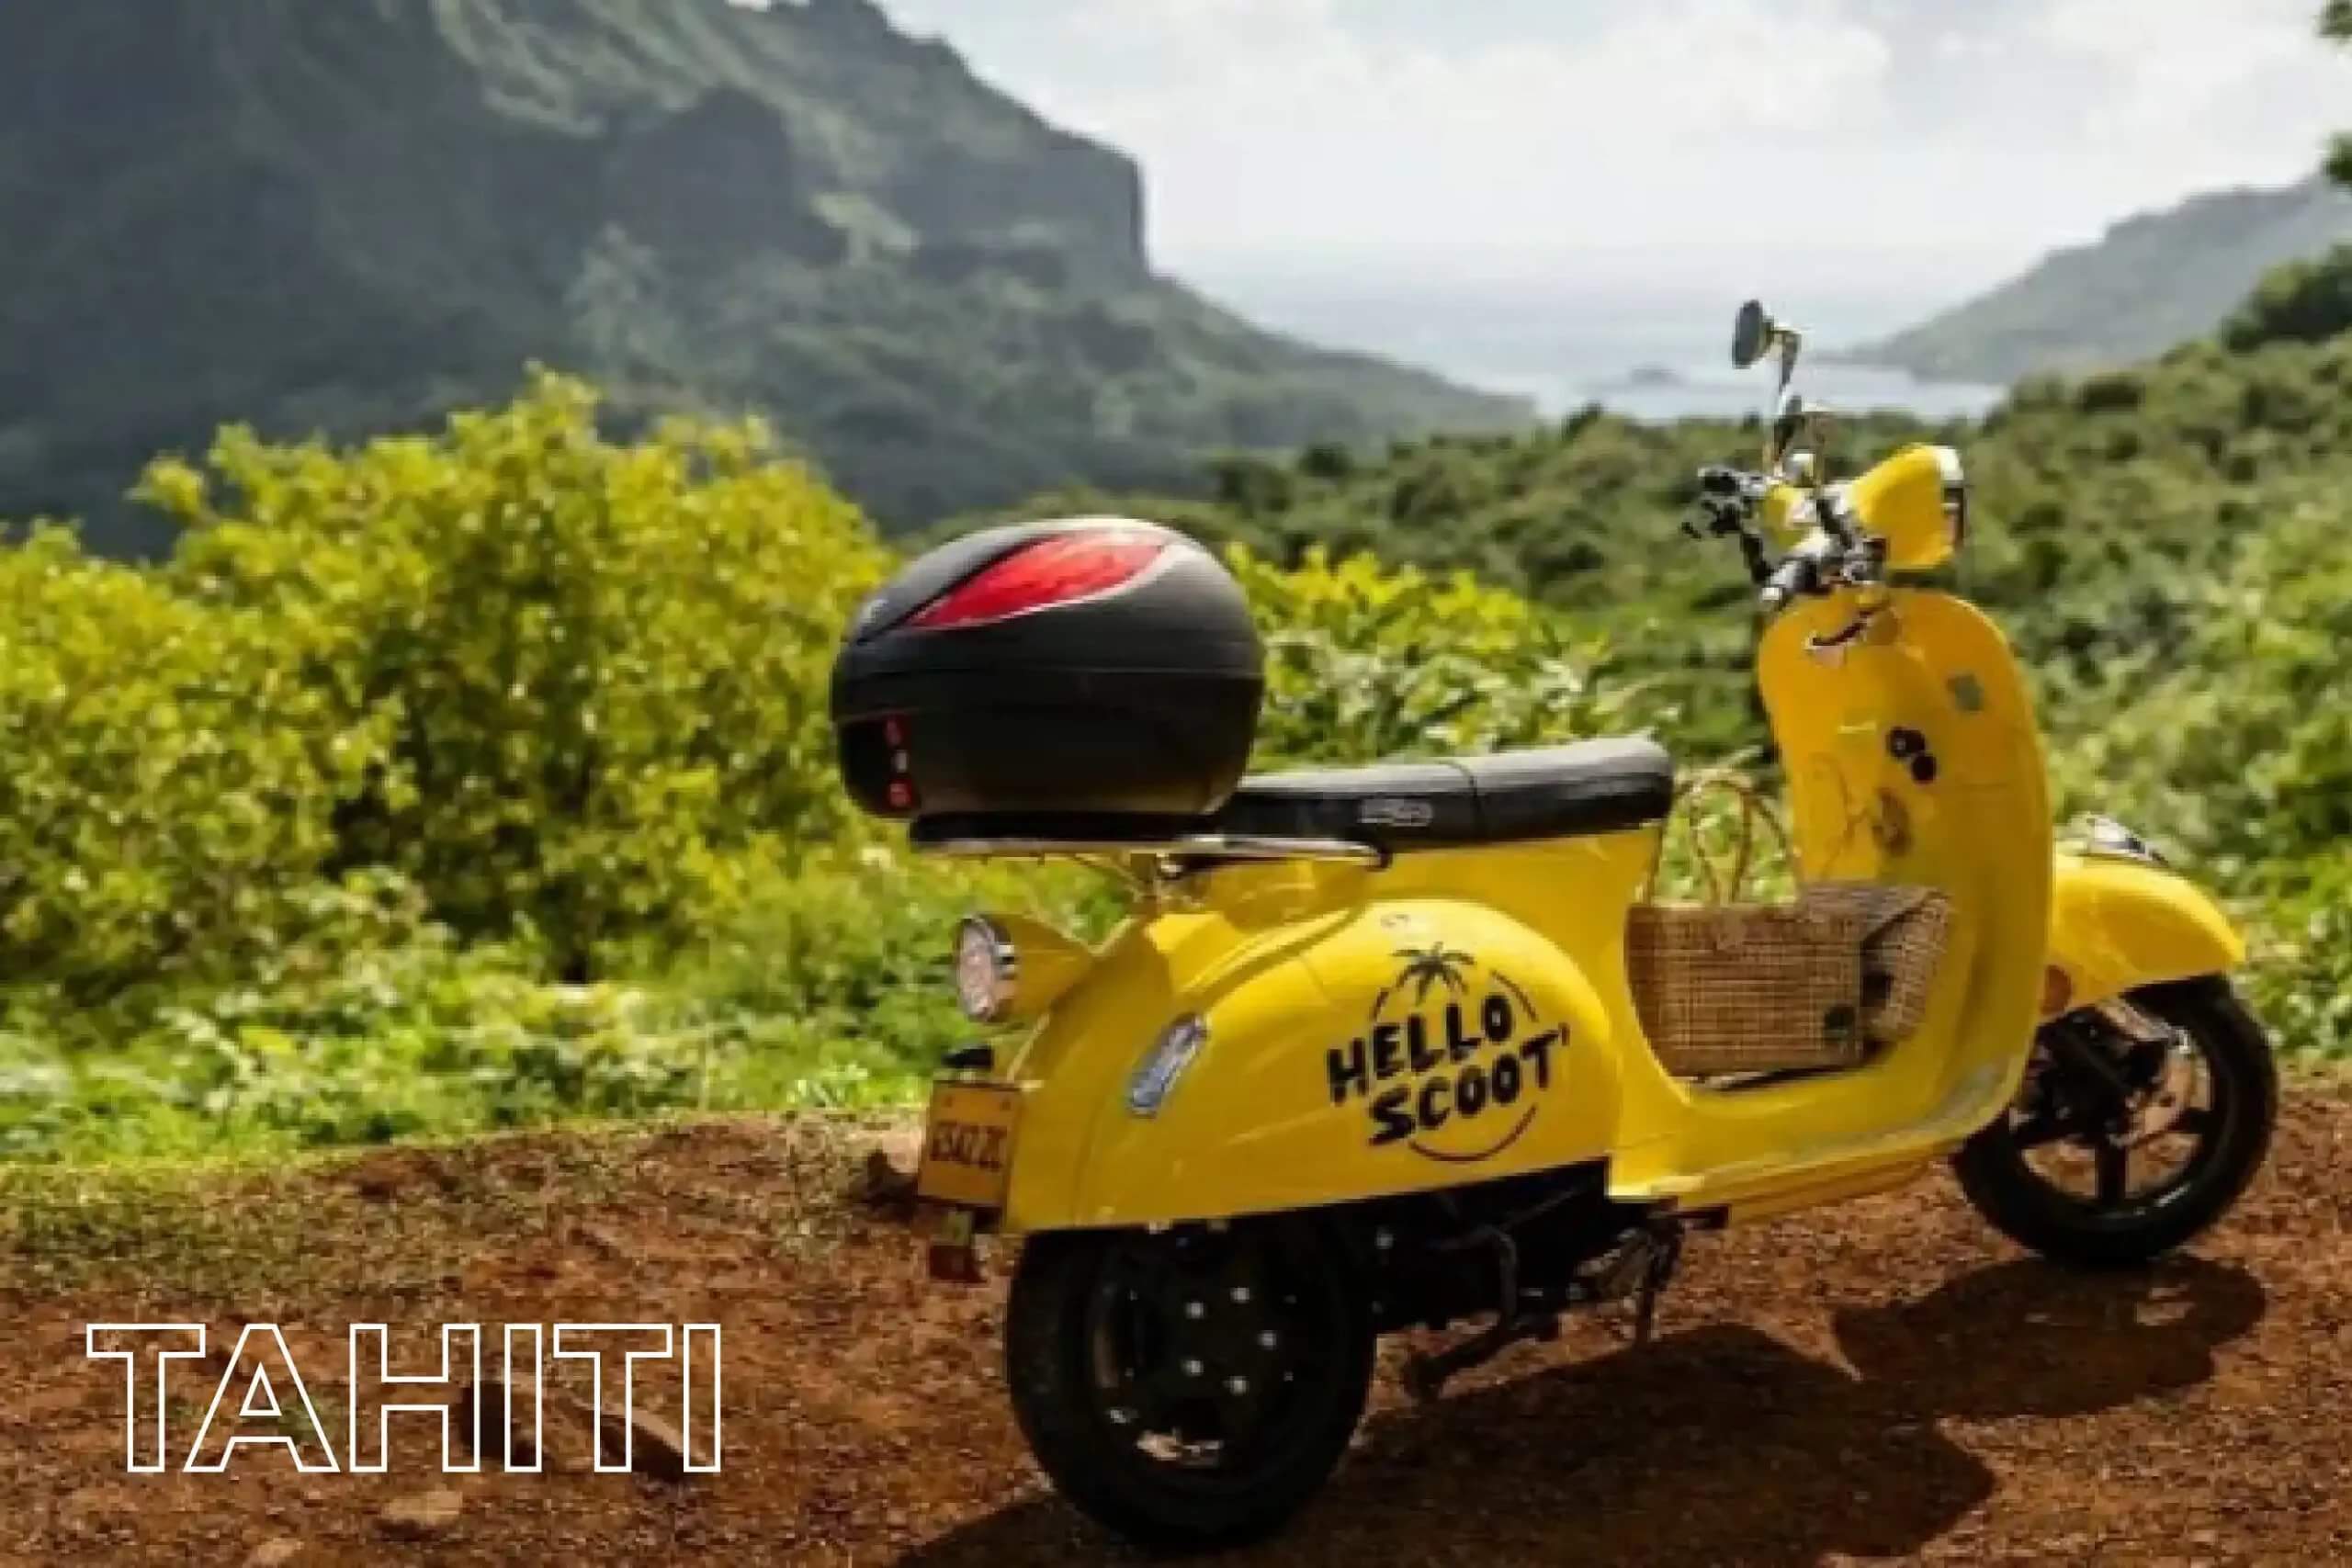 Hello Scoot' yellow scooter in Tahiti